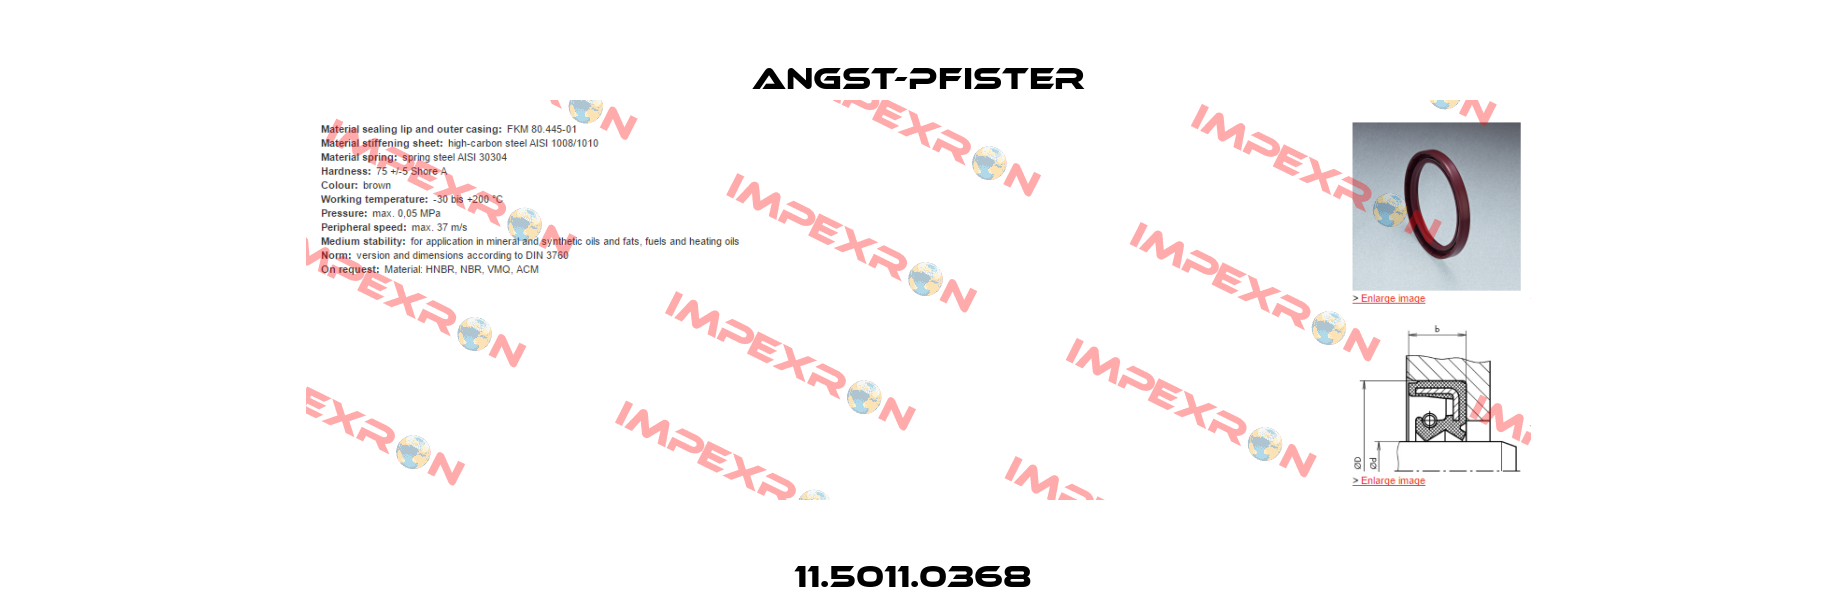 11.5011.0368  Angst-Pfister